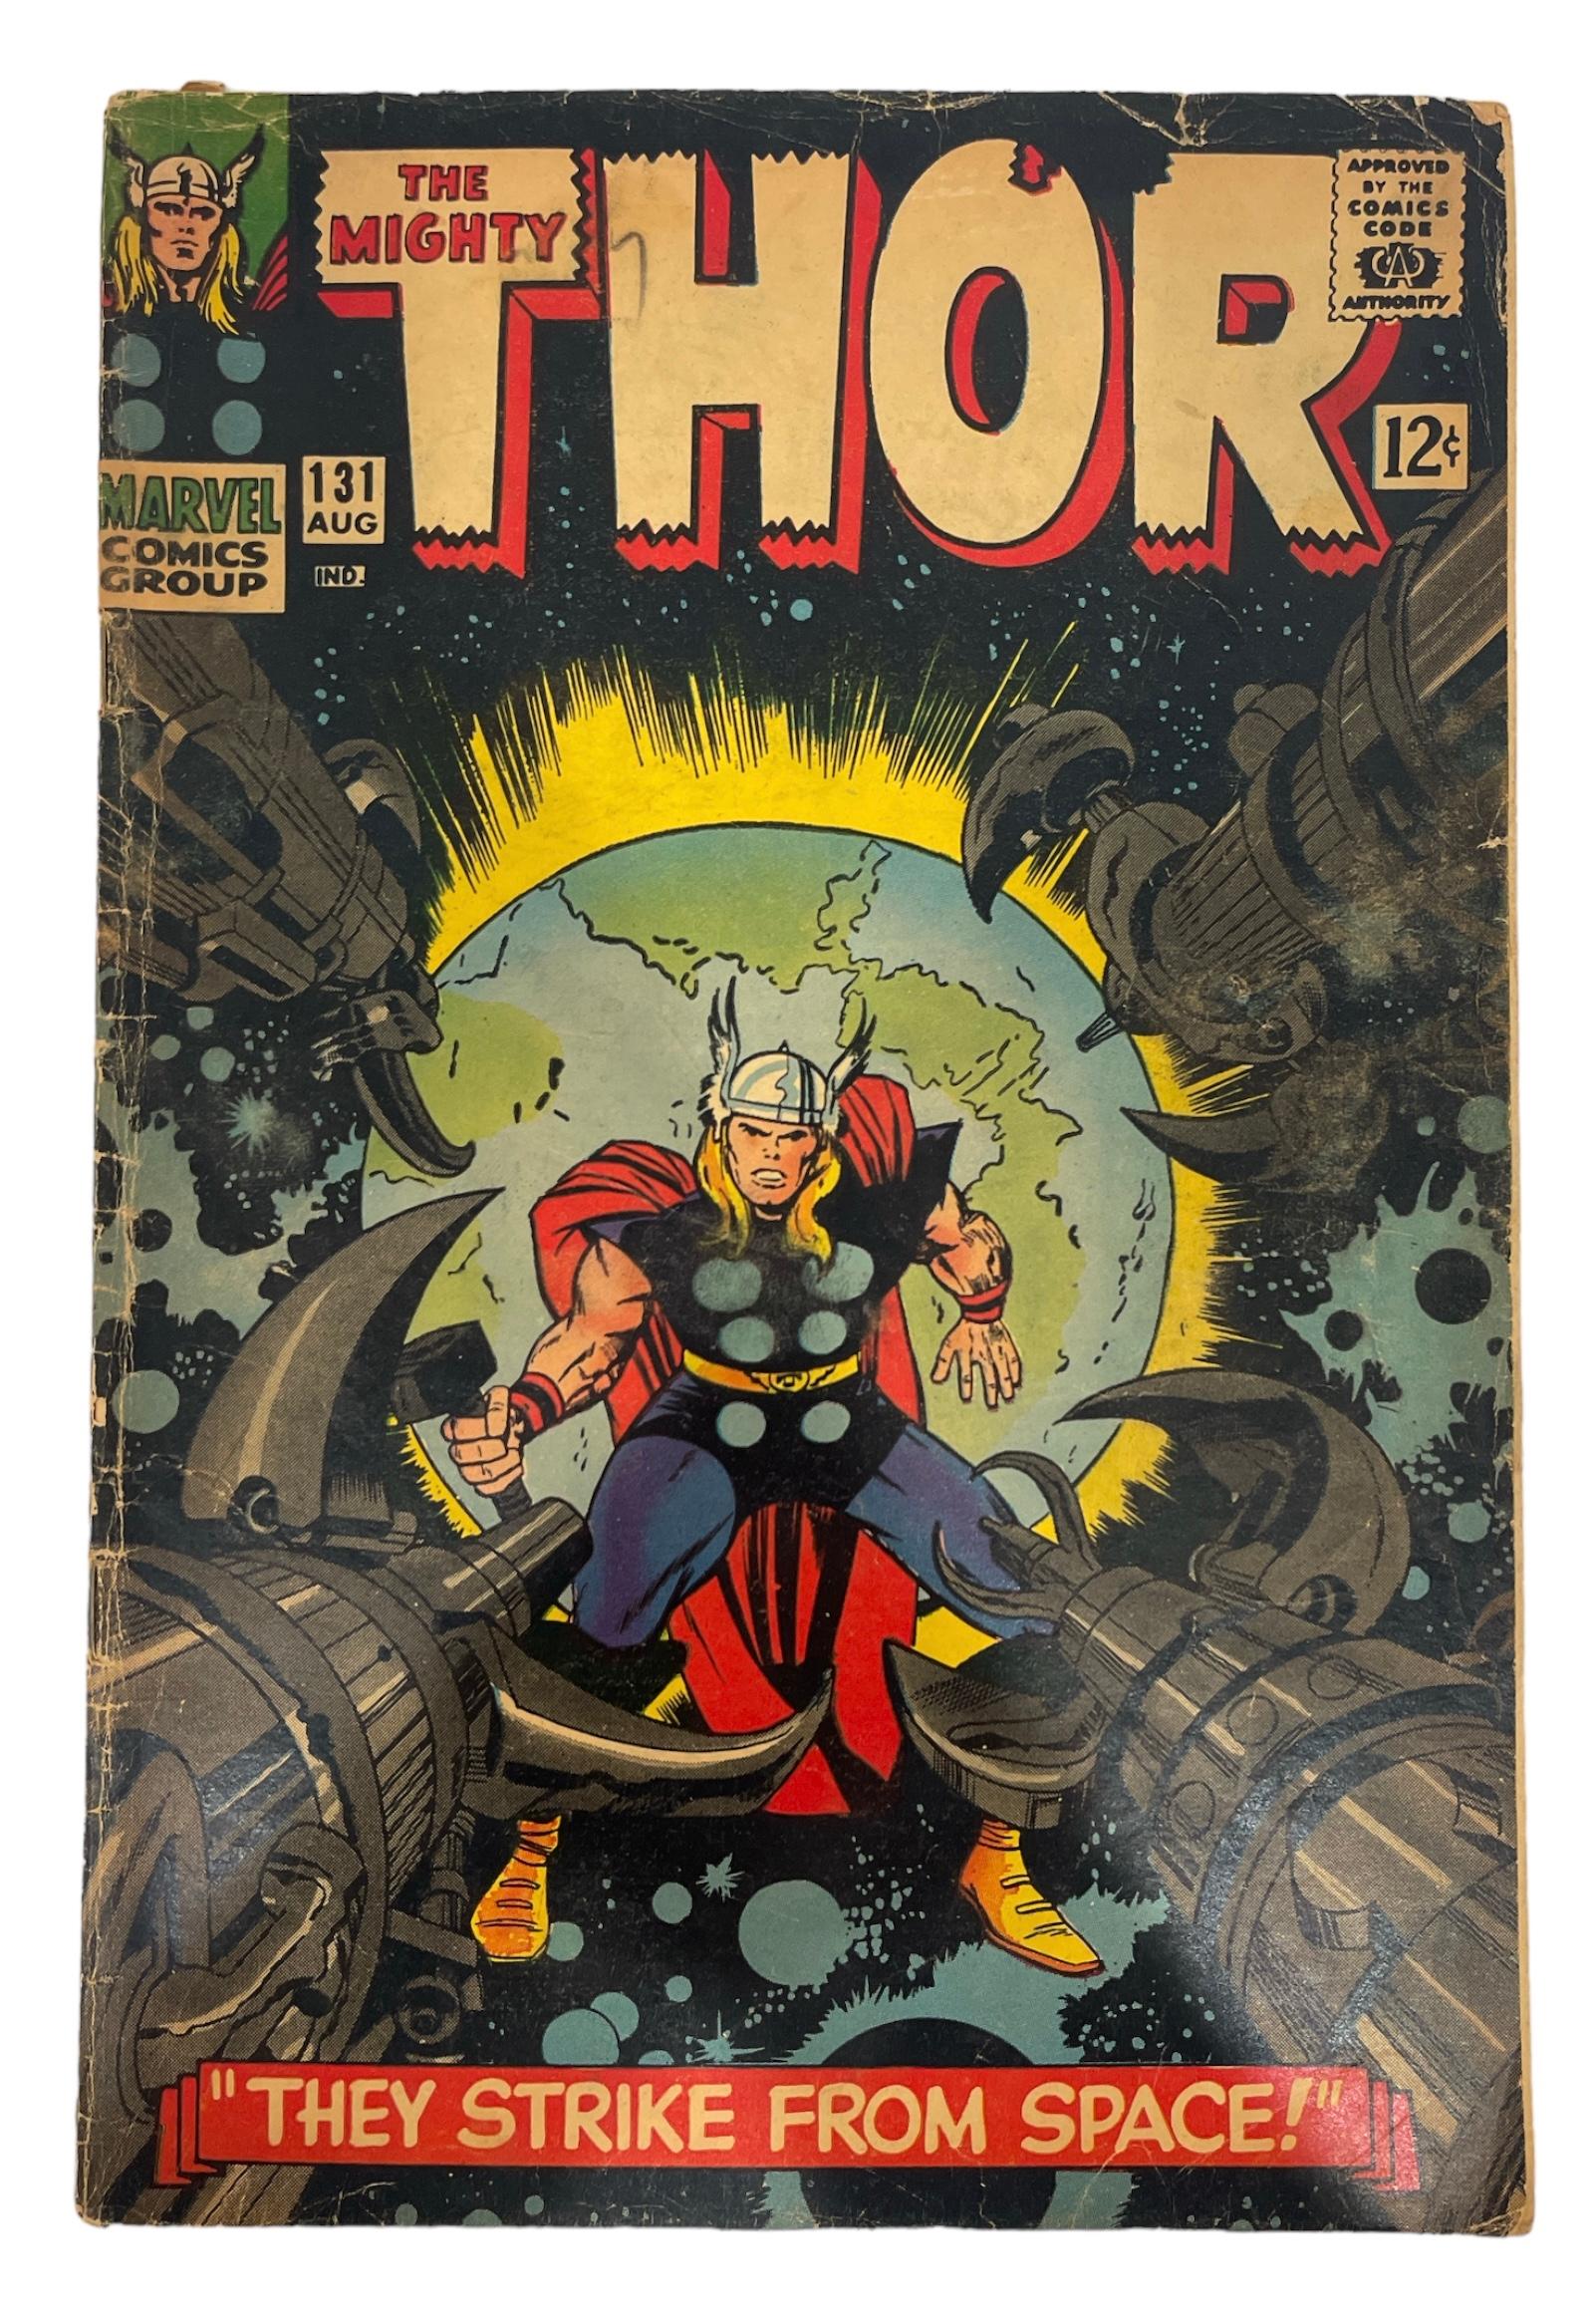 Vintage Marvel Comics - The Mighty Thor No.131 and Sub-Mariner No.98